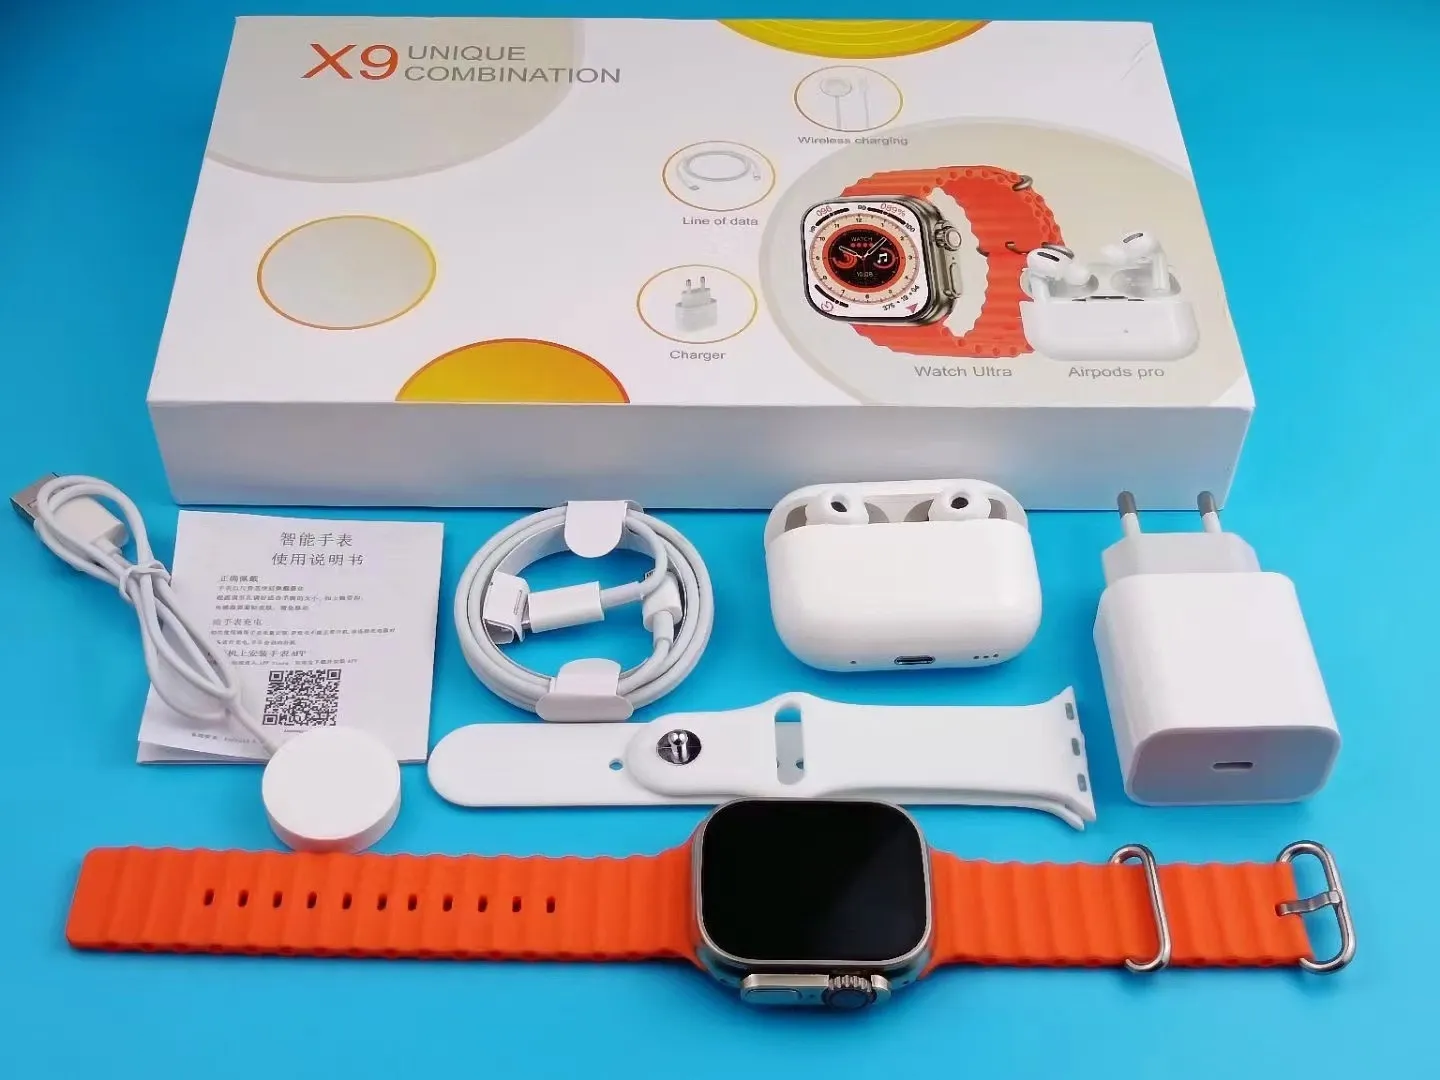 X8 Unique Combination Smart Watch Price in Pakistan